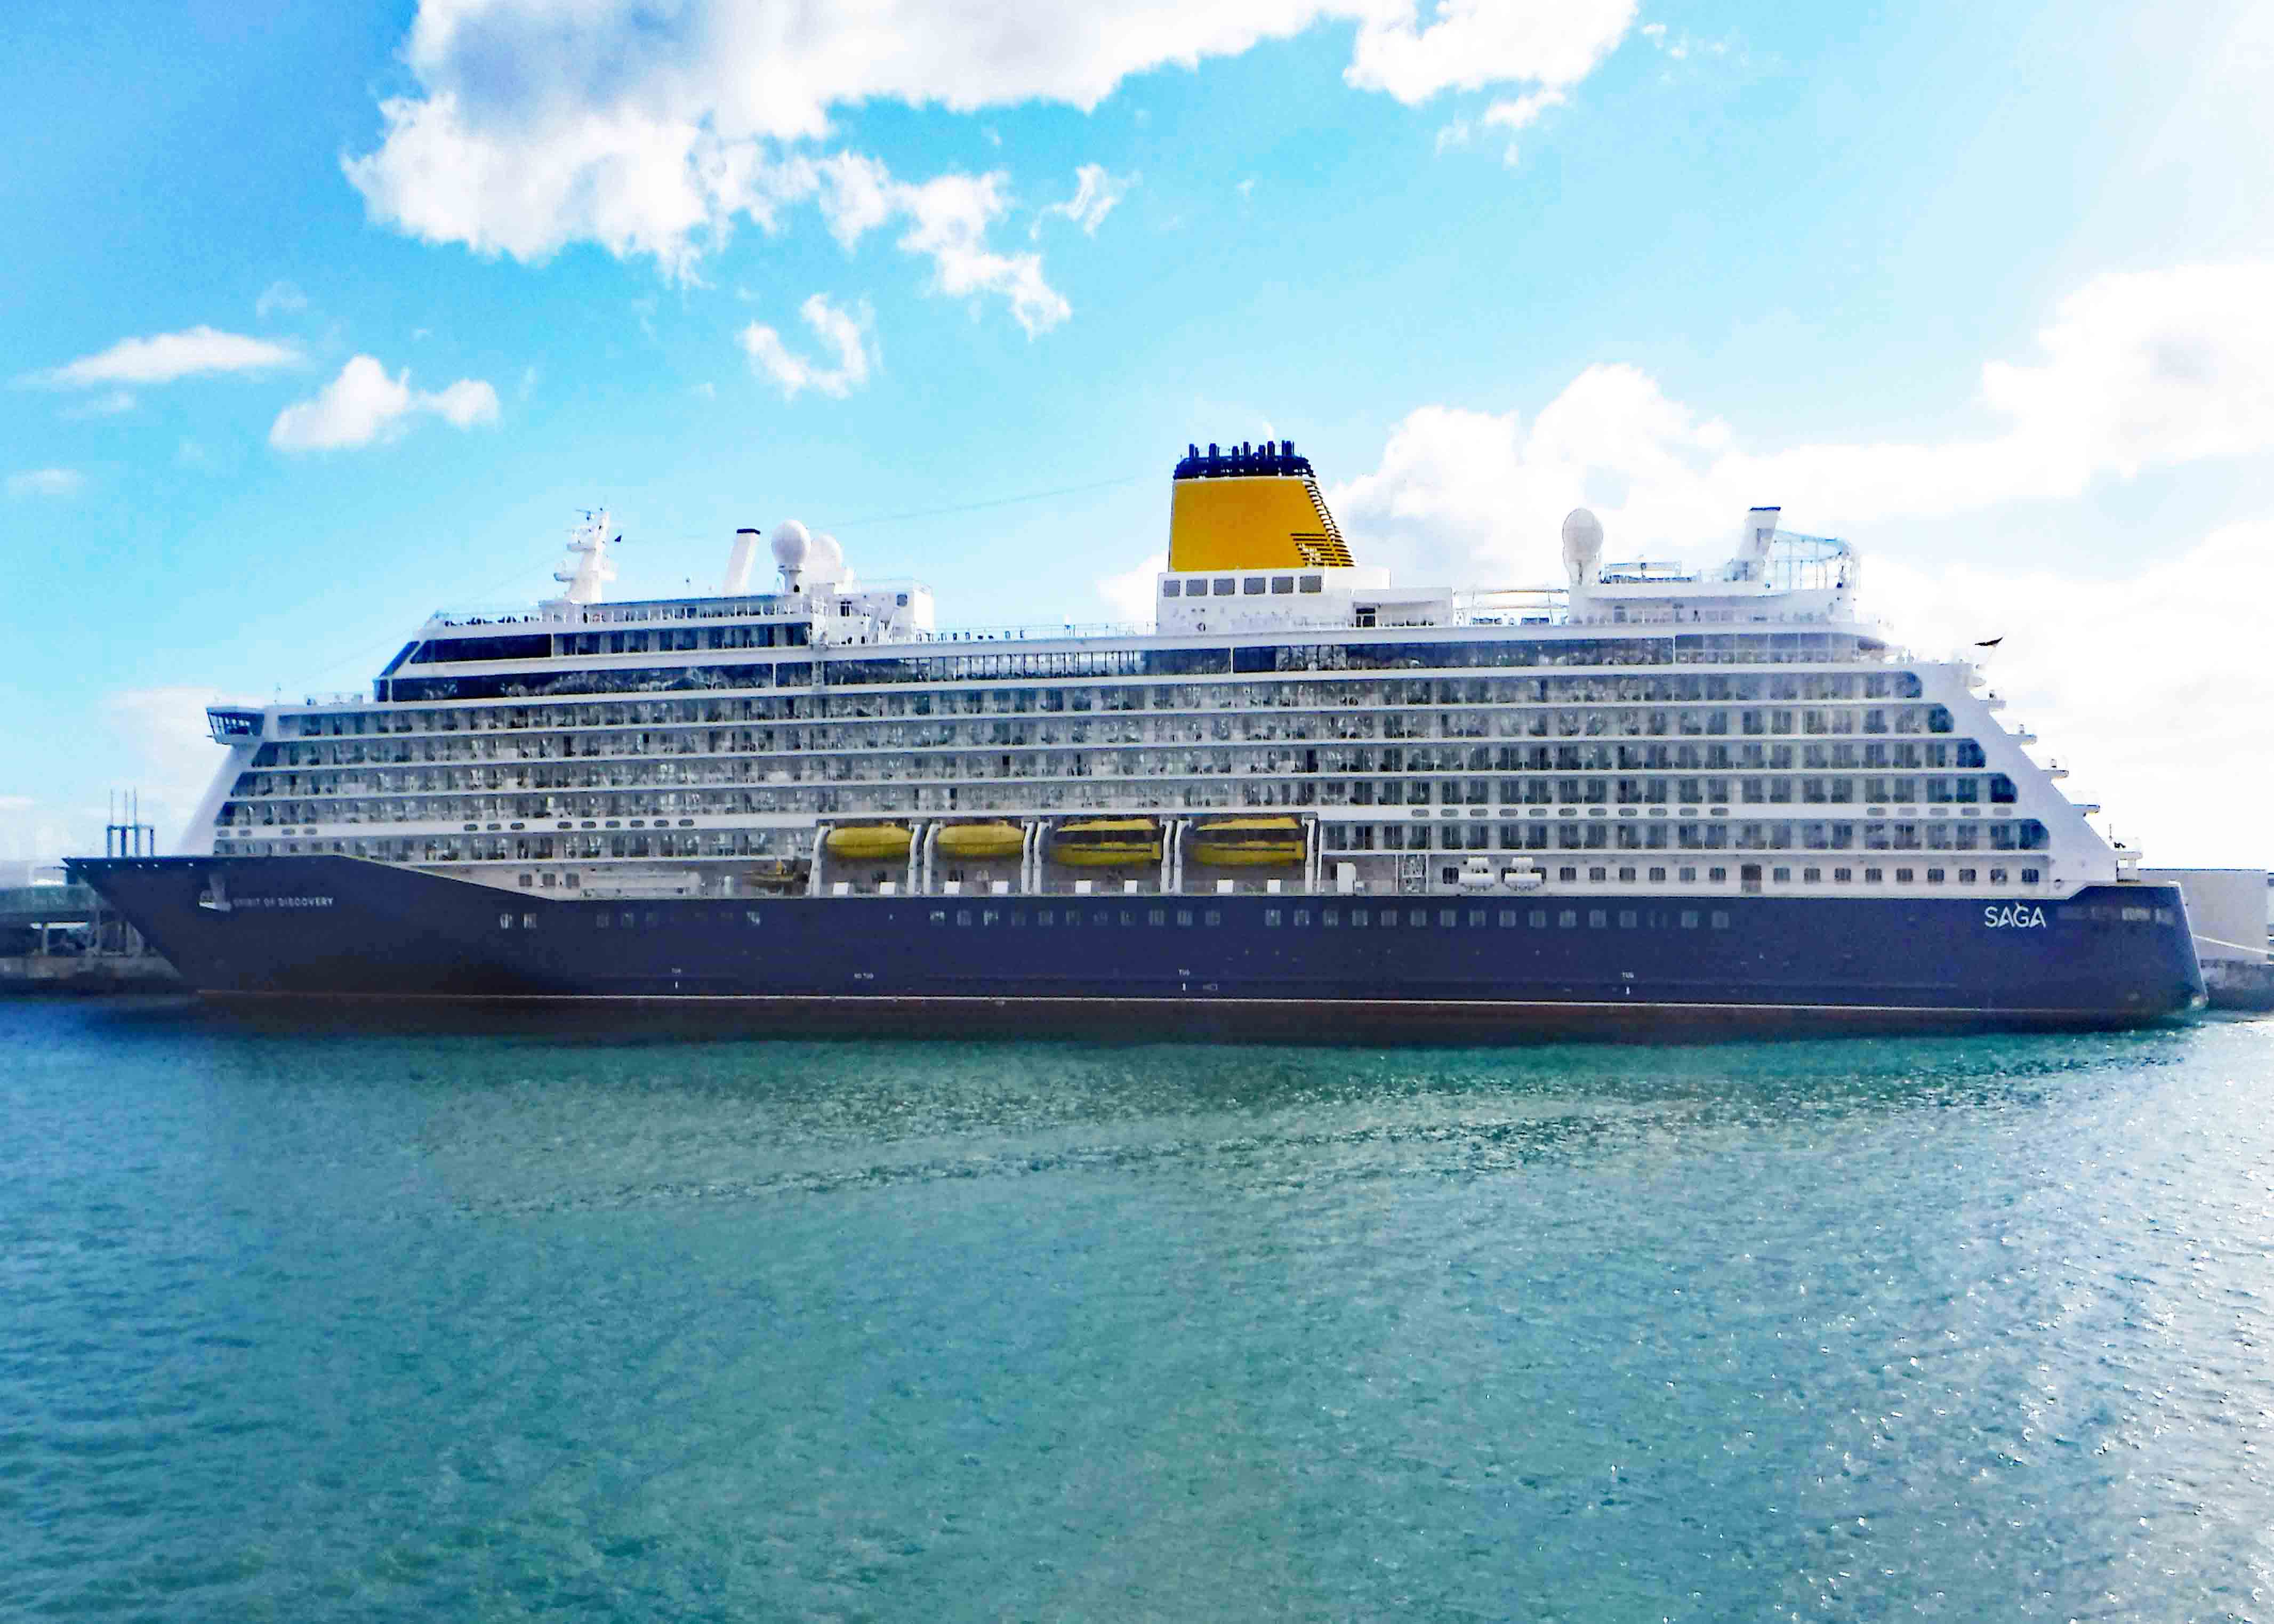 Saga Cruise: Spirit of Discovery in Funchal